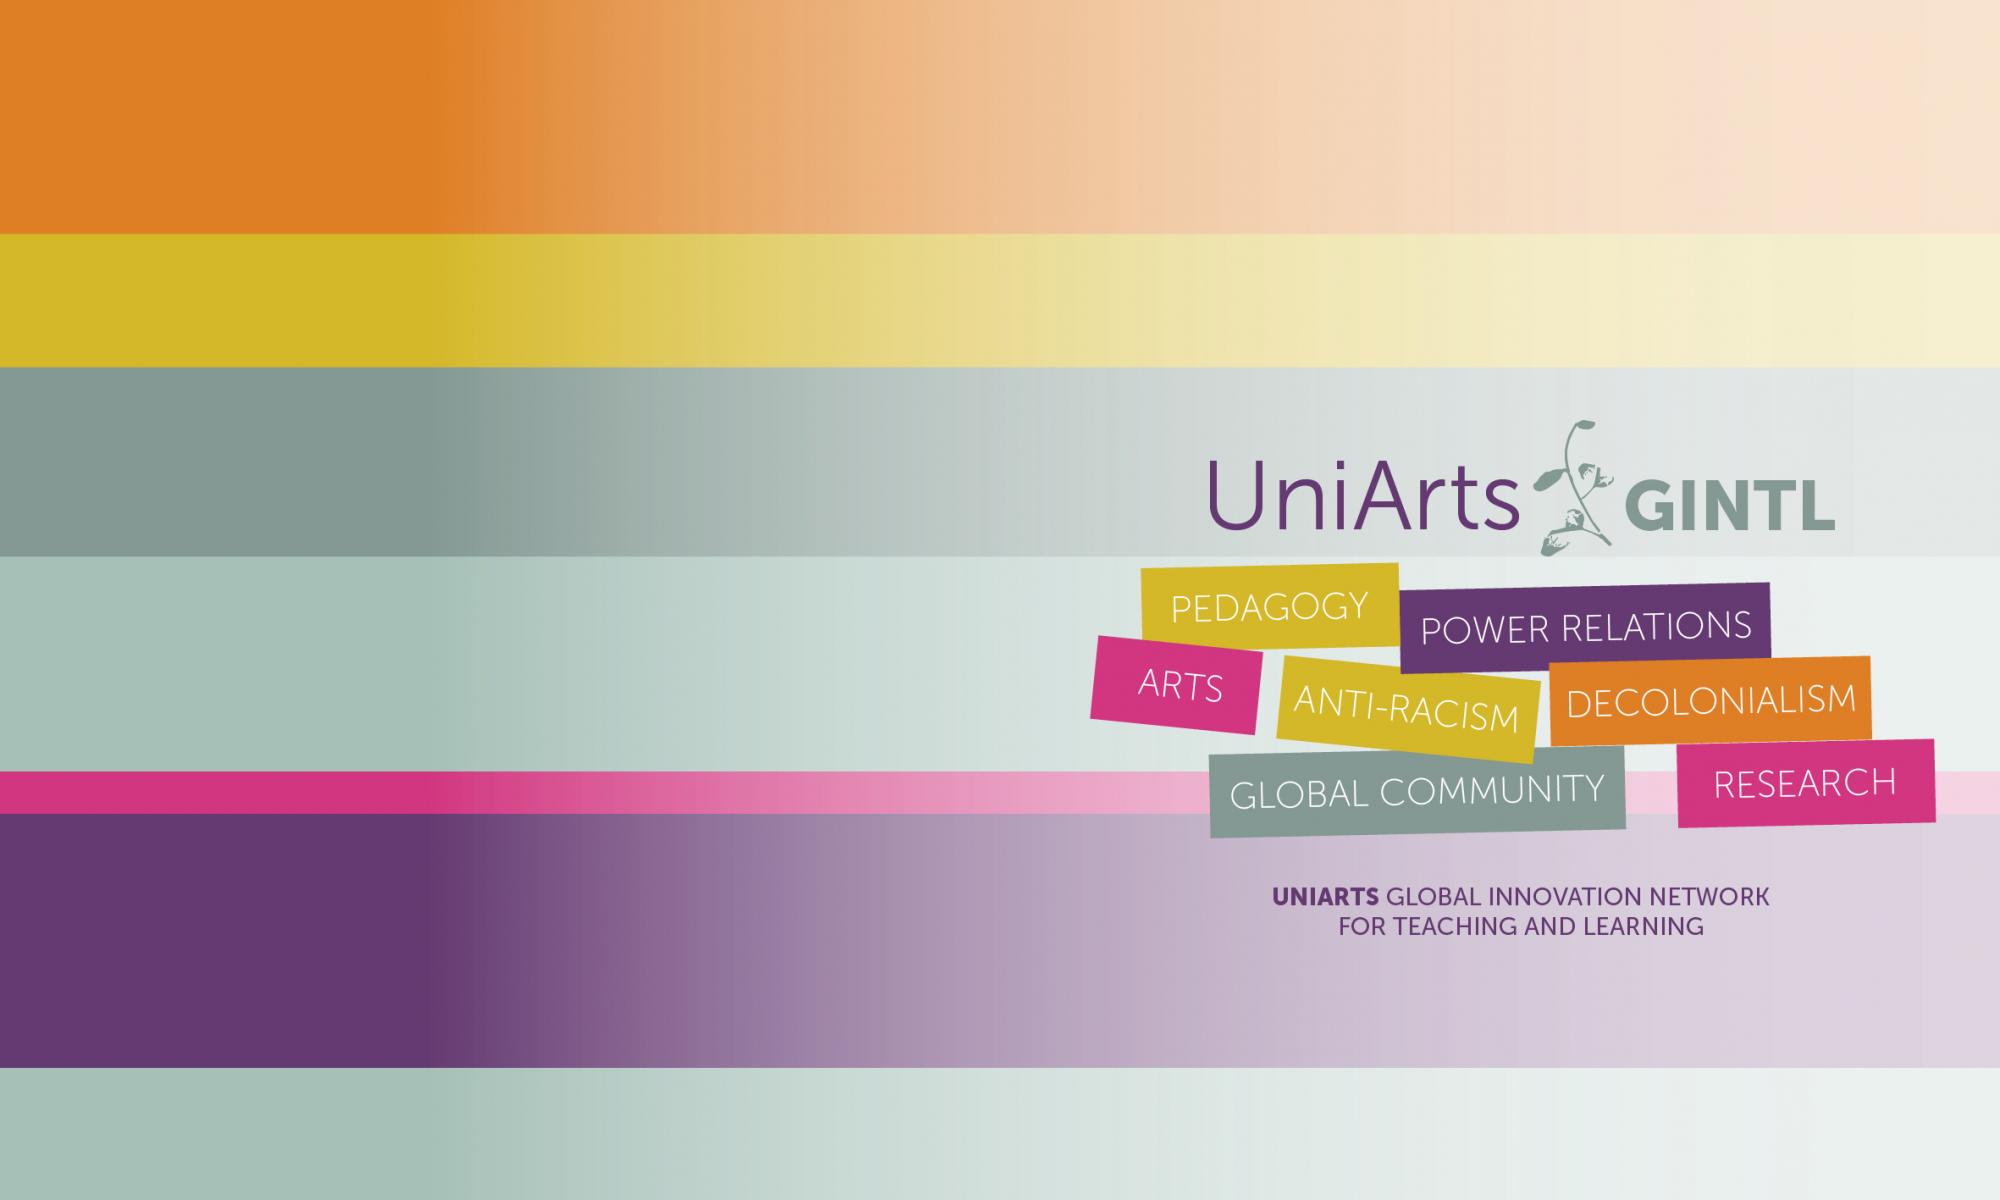 Colorful Uniarts GINTL logo